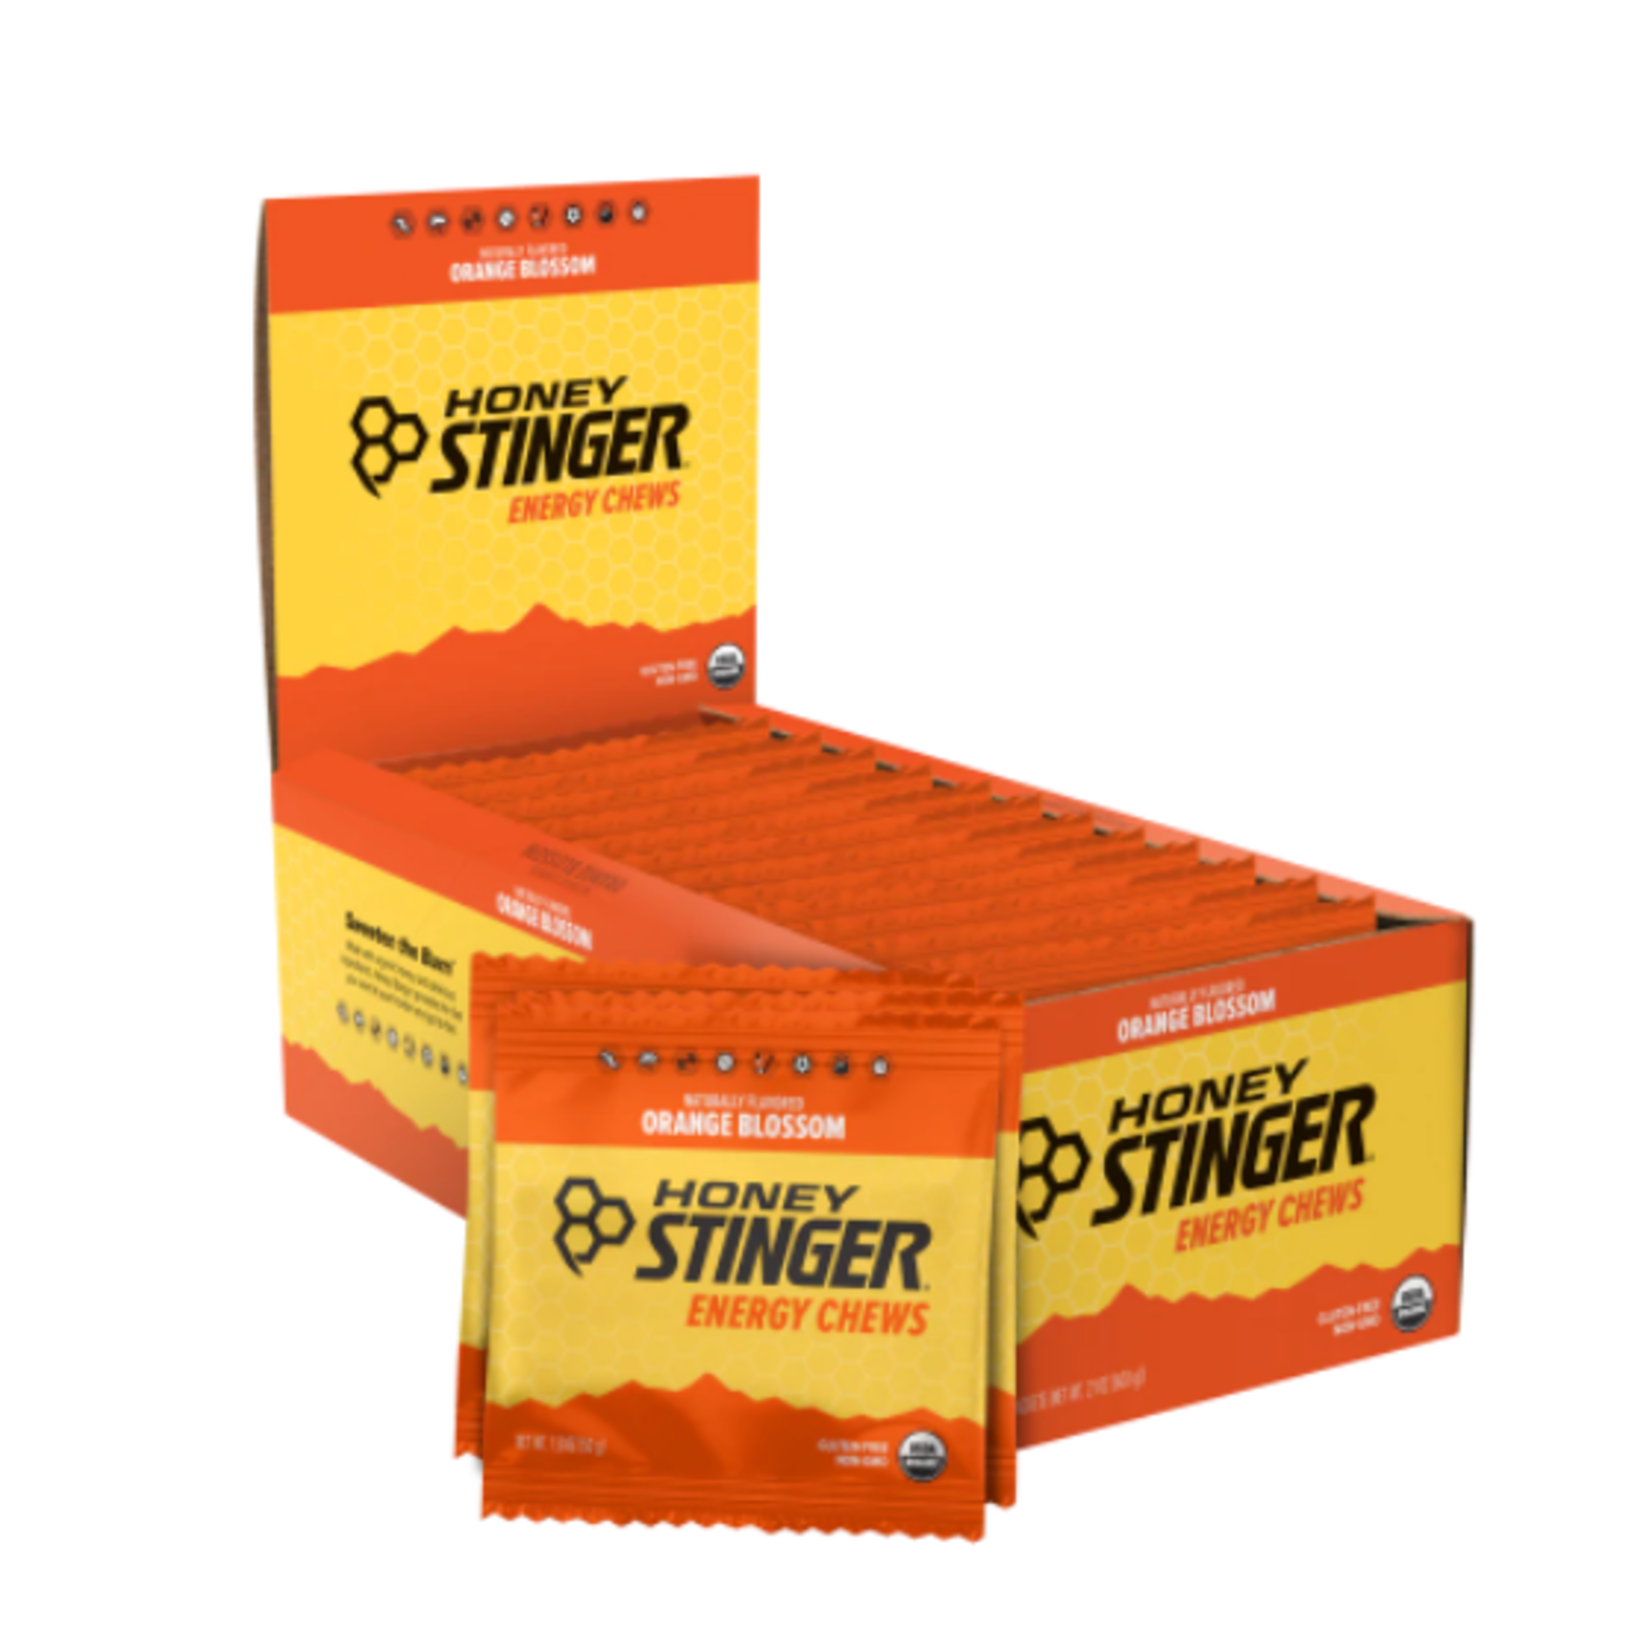 Honey Stinger, Organic Energy Chews, Box of 12 x50g